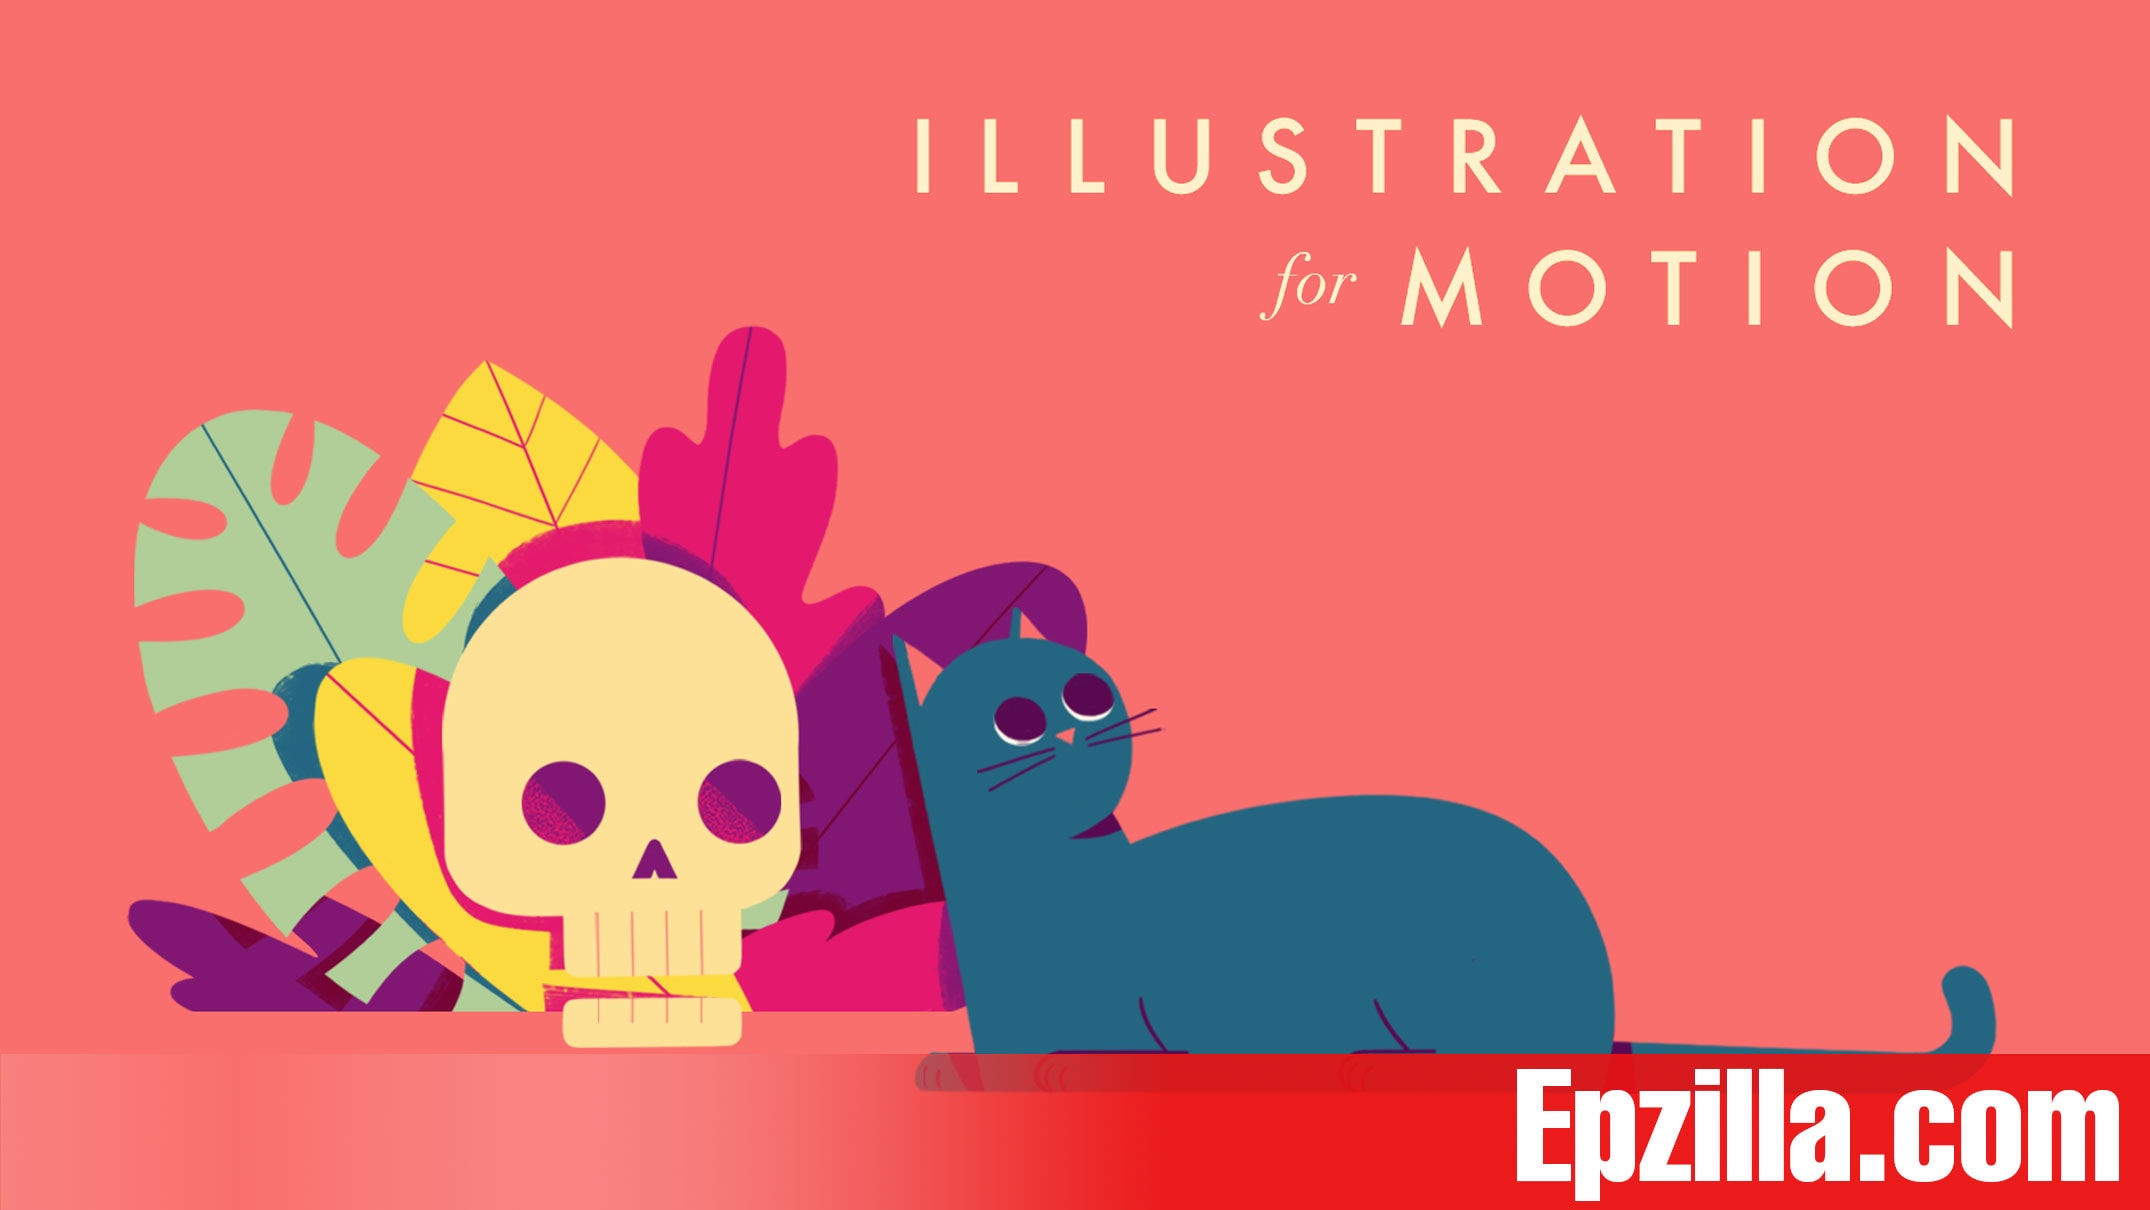 School of Motion Illustration For Motion Free Download Epzilla.com